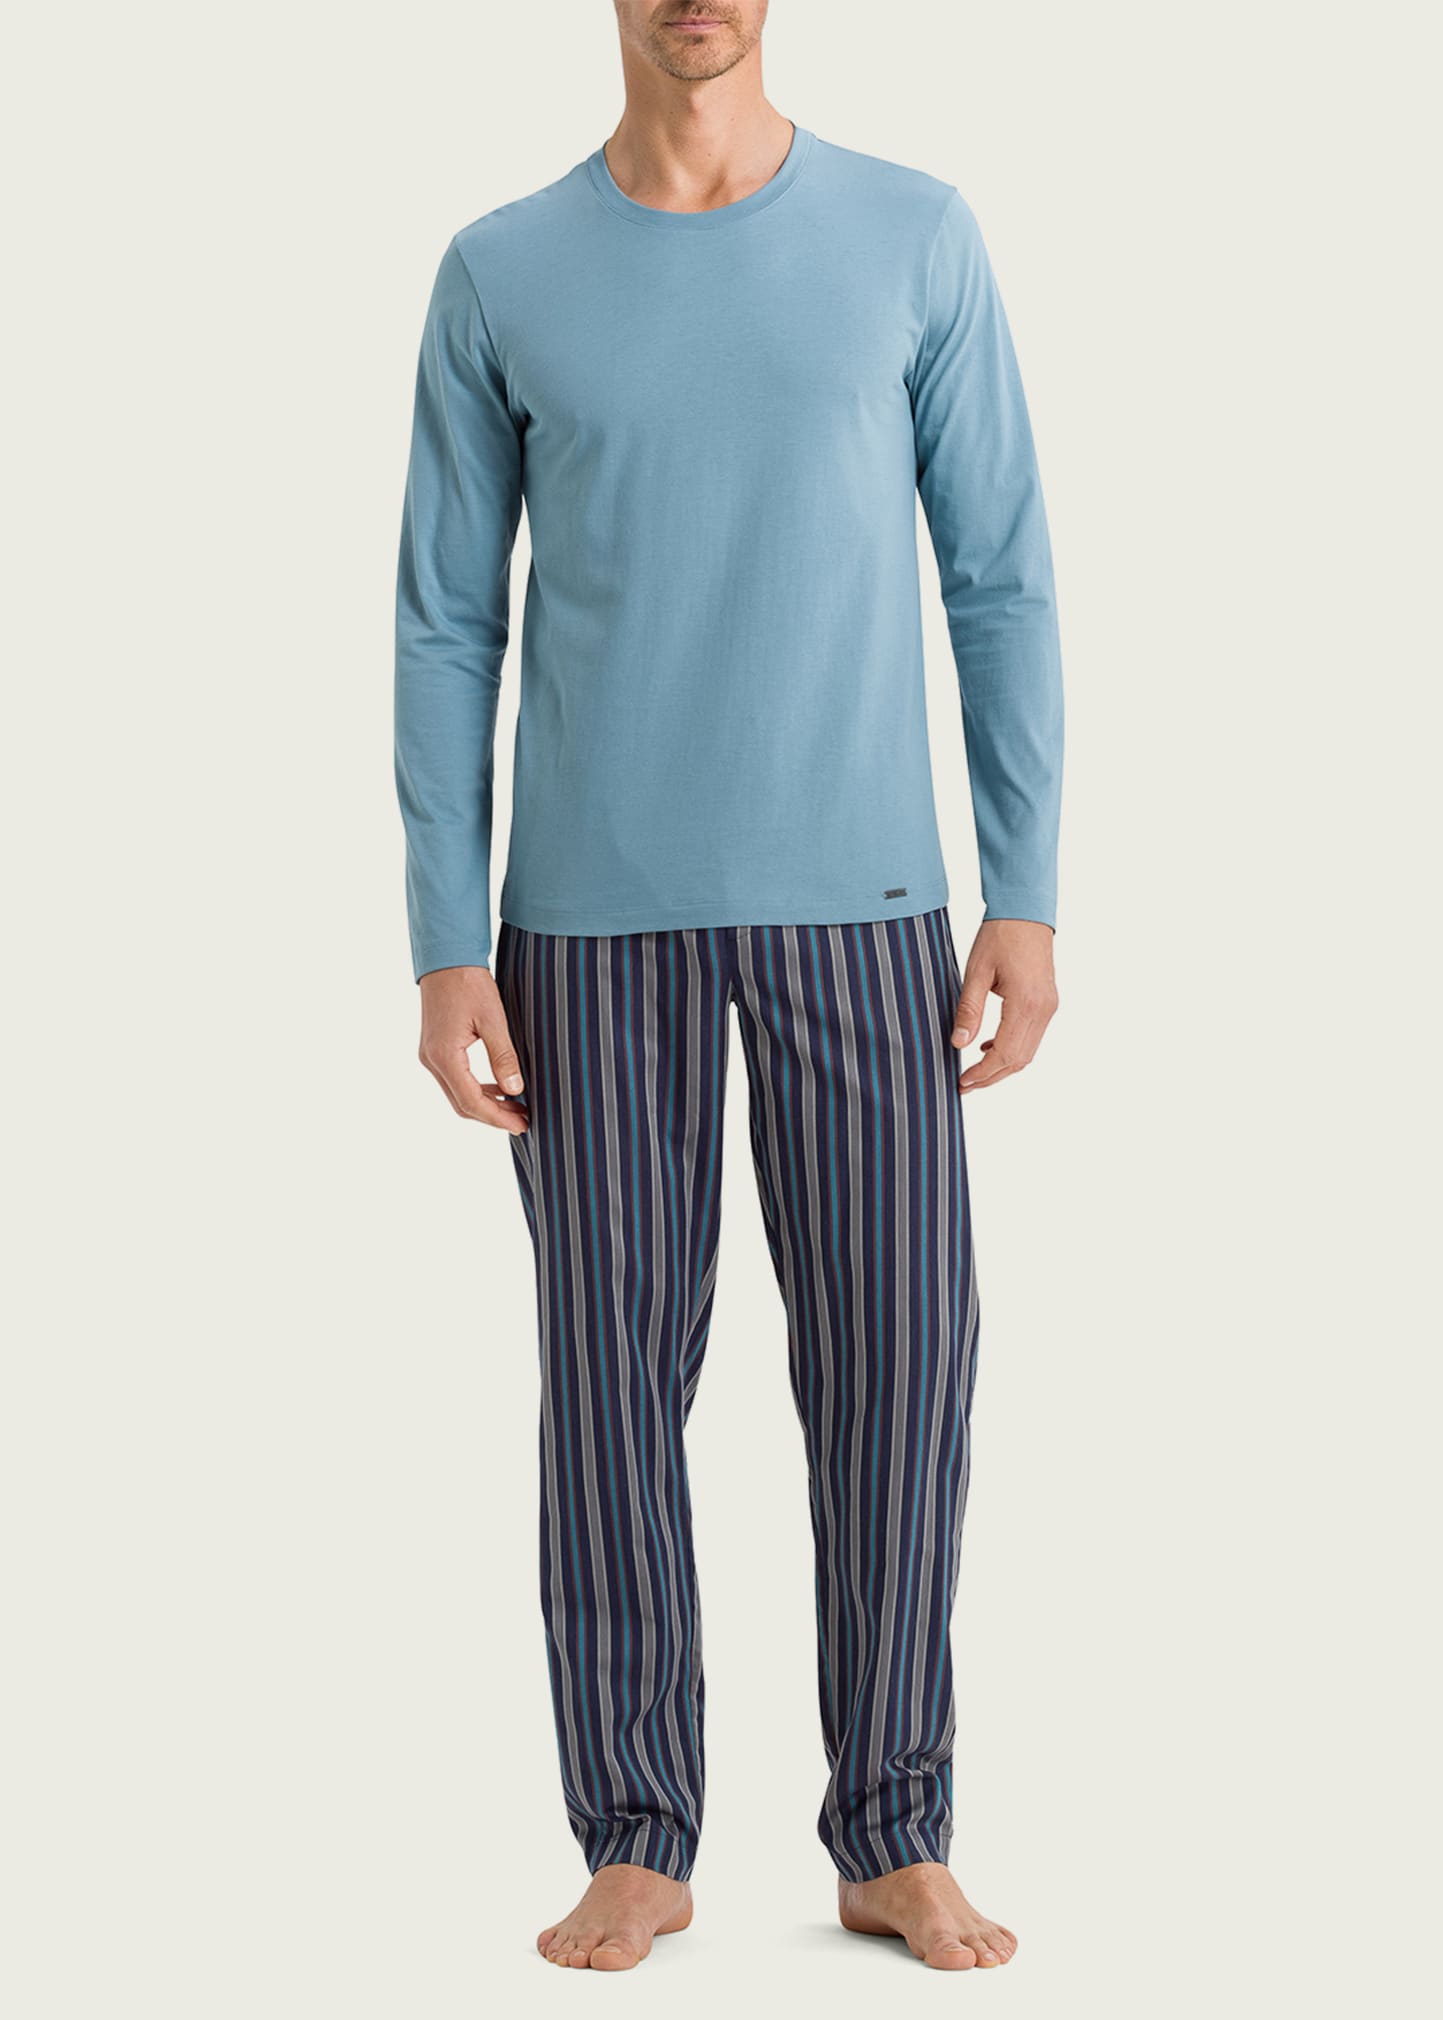 crazy-shop Cotton Pajama Set for Men Tshirt O-Neck Plus Size Underwear Long Sleeve Pajama Sleepwear Nightwear Male,1601,L